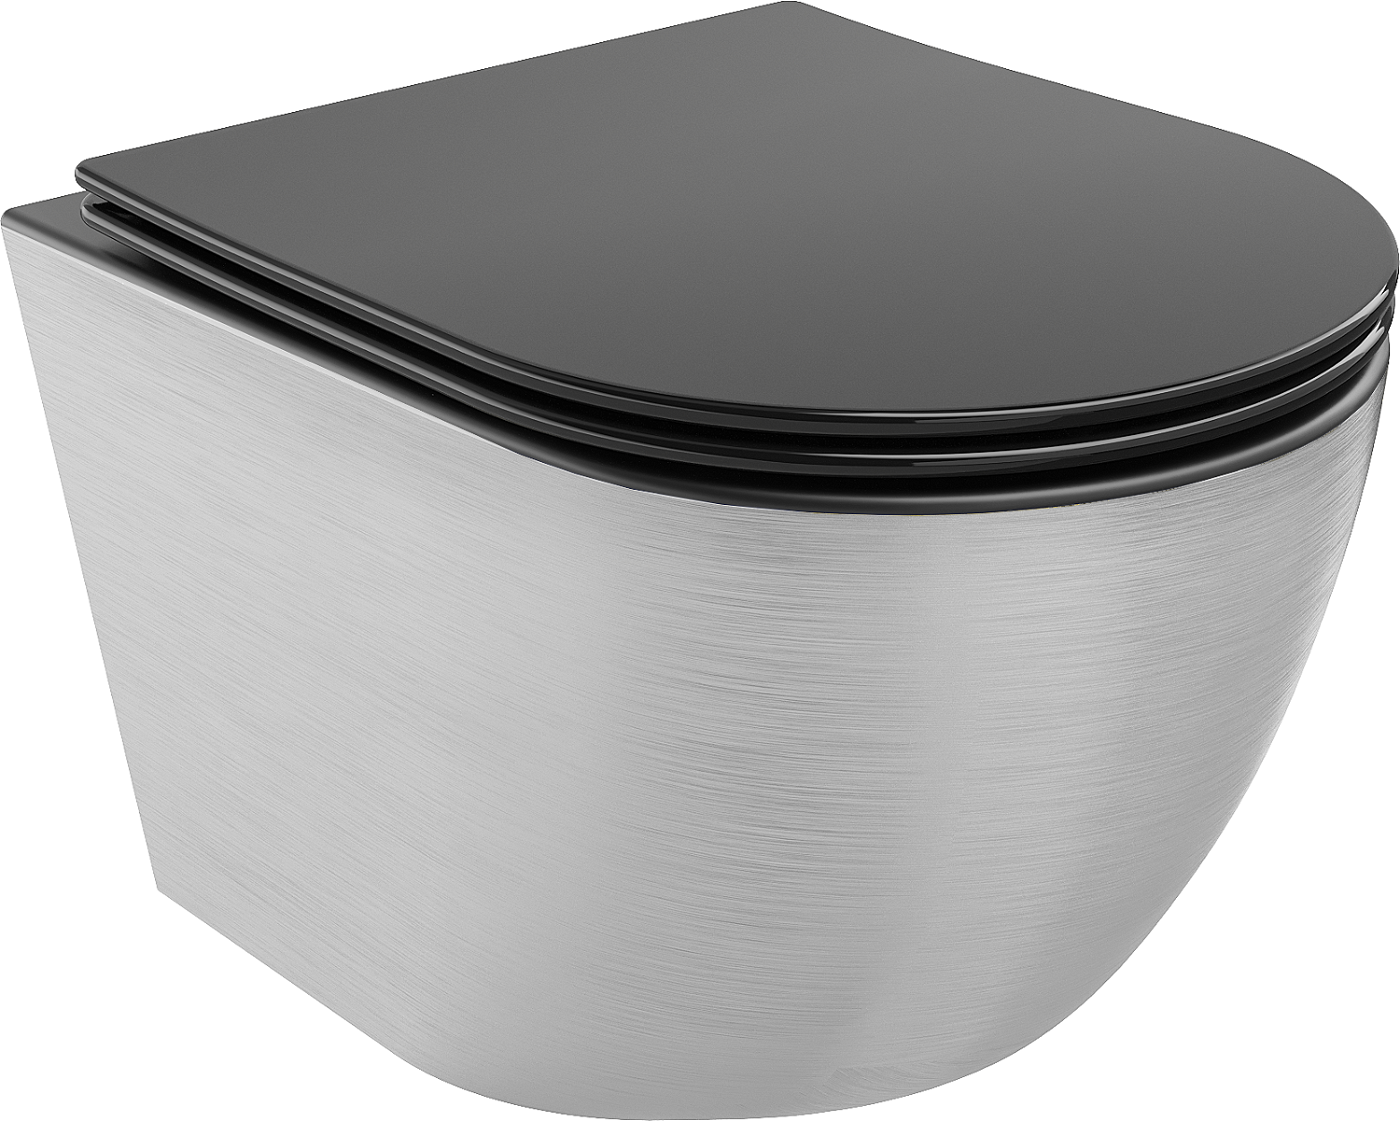 Mexen Lena WC mísa bez okraje s pomalu klesající deskou slim, duroplast, černá matná/stříbrný vzor linie - 30224073